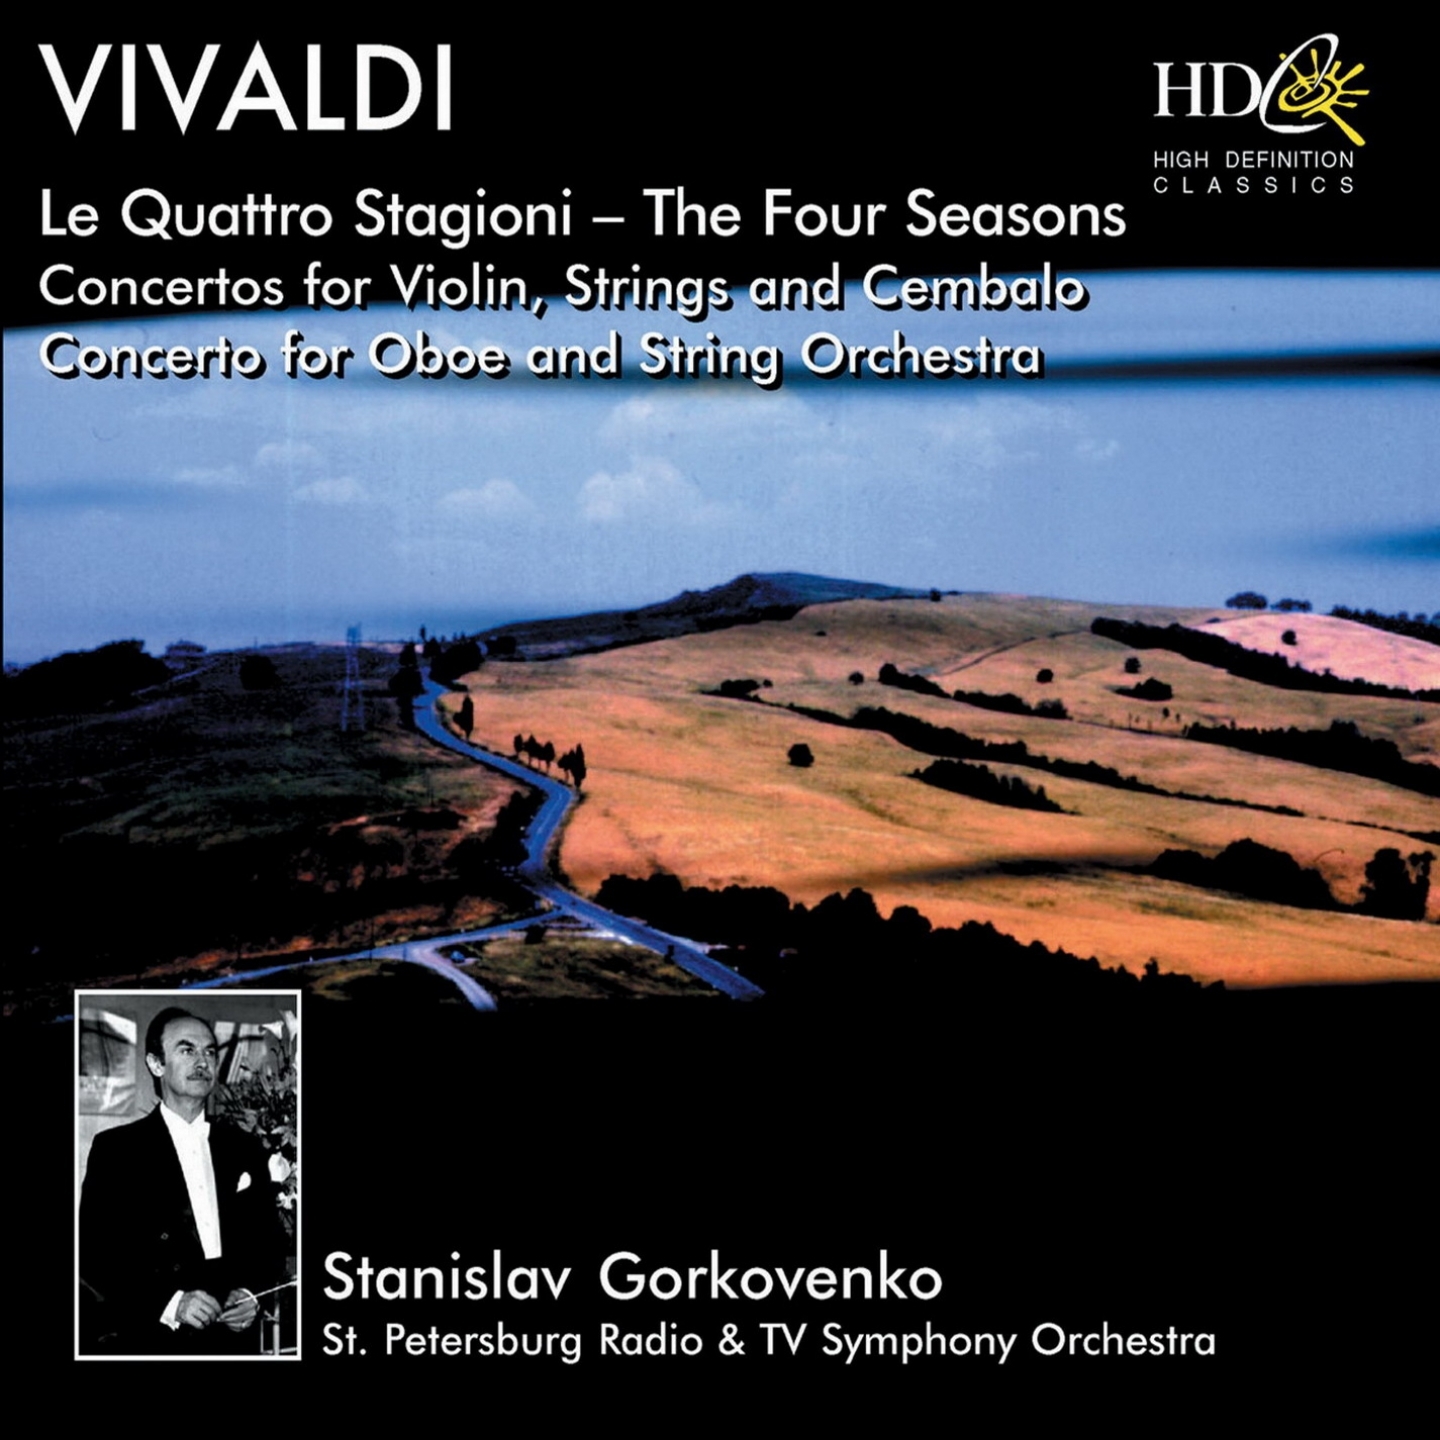 Le Quattro Stagioni, Concertos for Violin, Strings and Cembalo, Op. 8, L'Estate (Summer), Concerto No.2 in G Minor: III. Presto